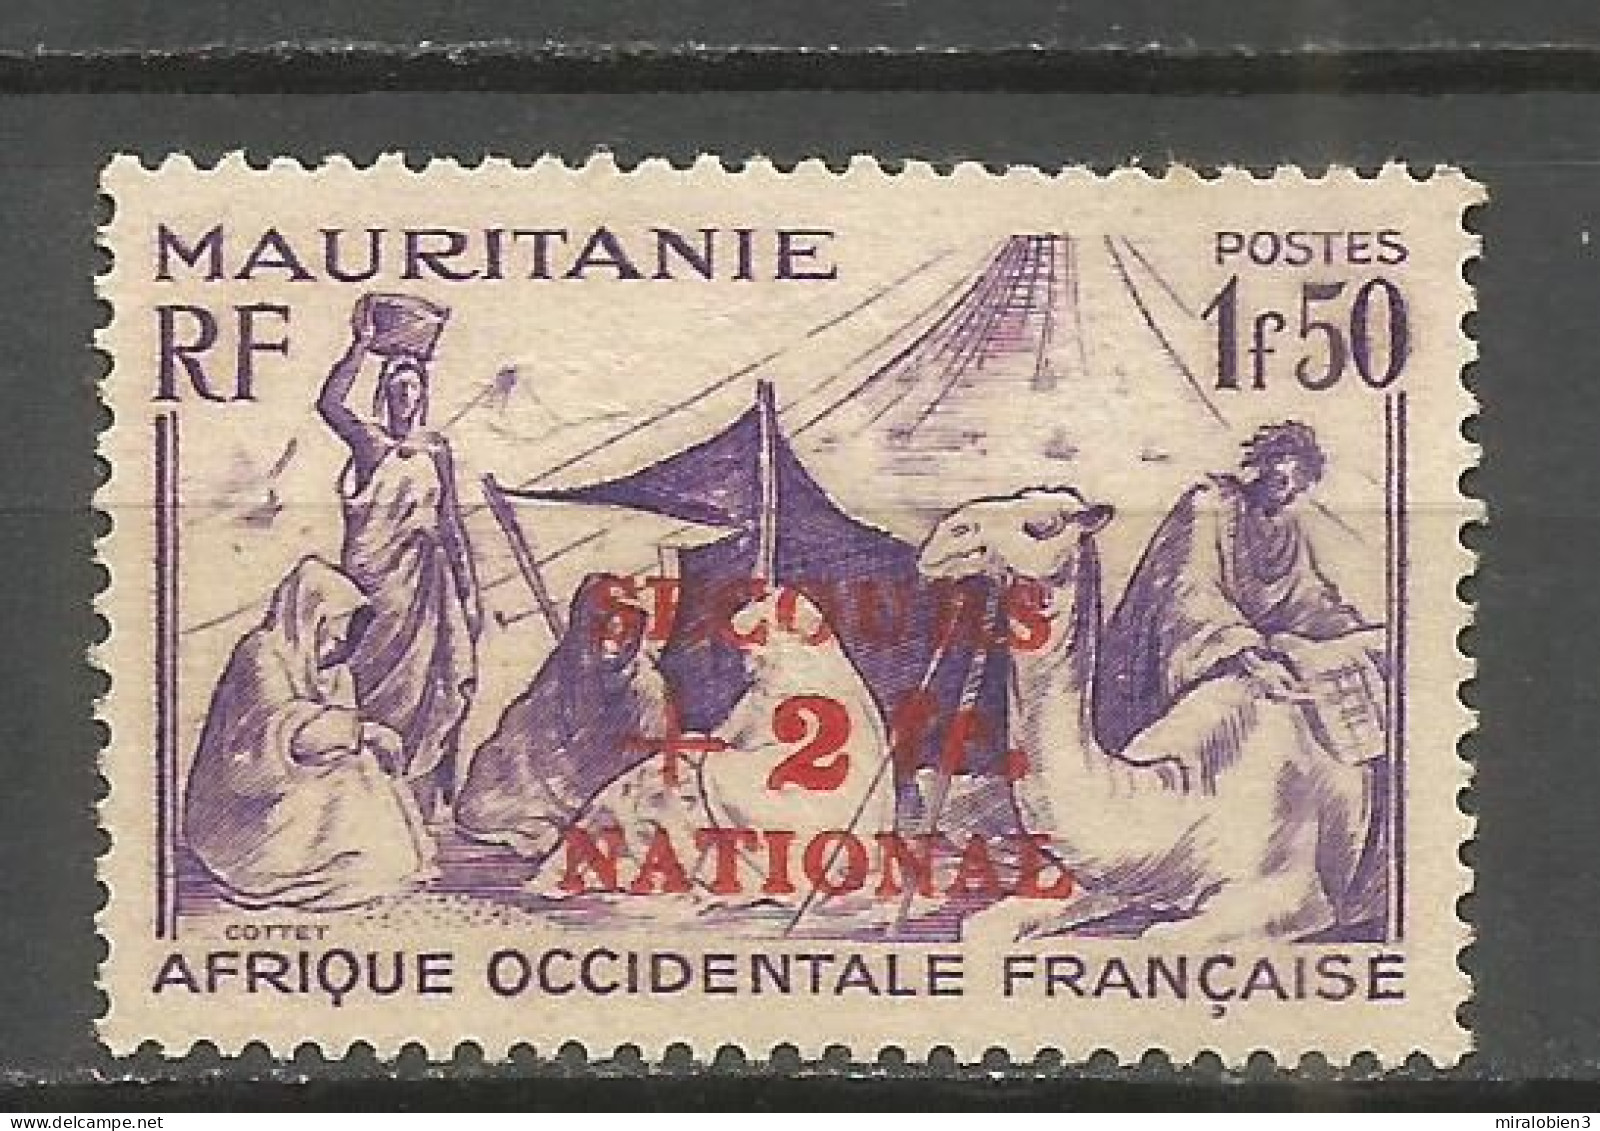 MAURITANIA COLONIA FRANCESA YVERT NUM. 121 USADO - Used Stamps